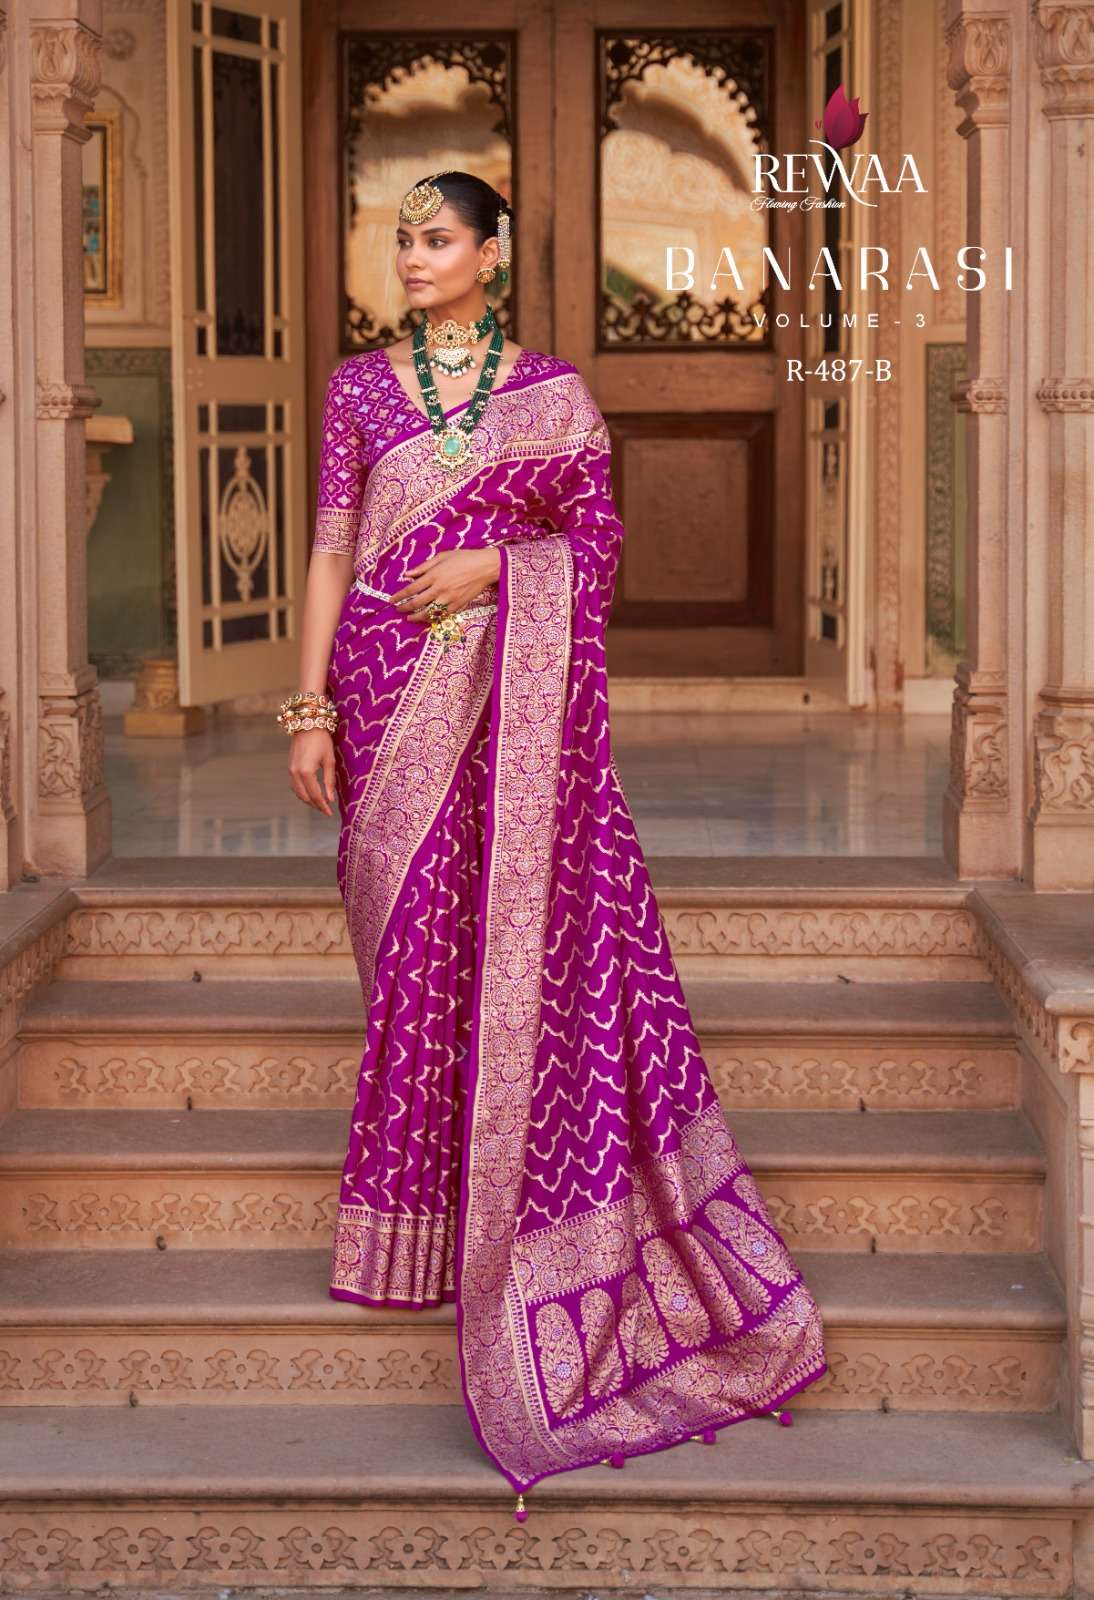 Manjula Presents Banarasi Vol-3 Series Latest Hit Designer Silk Saree Collection At Best Wholesale Price 